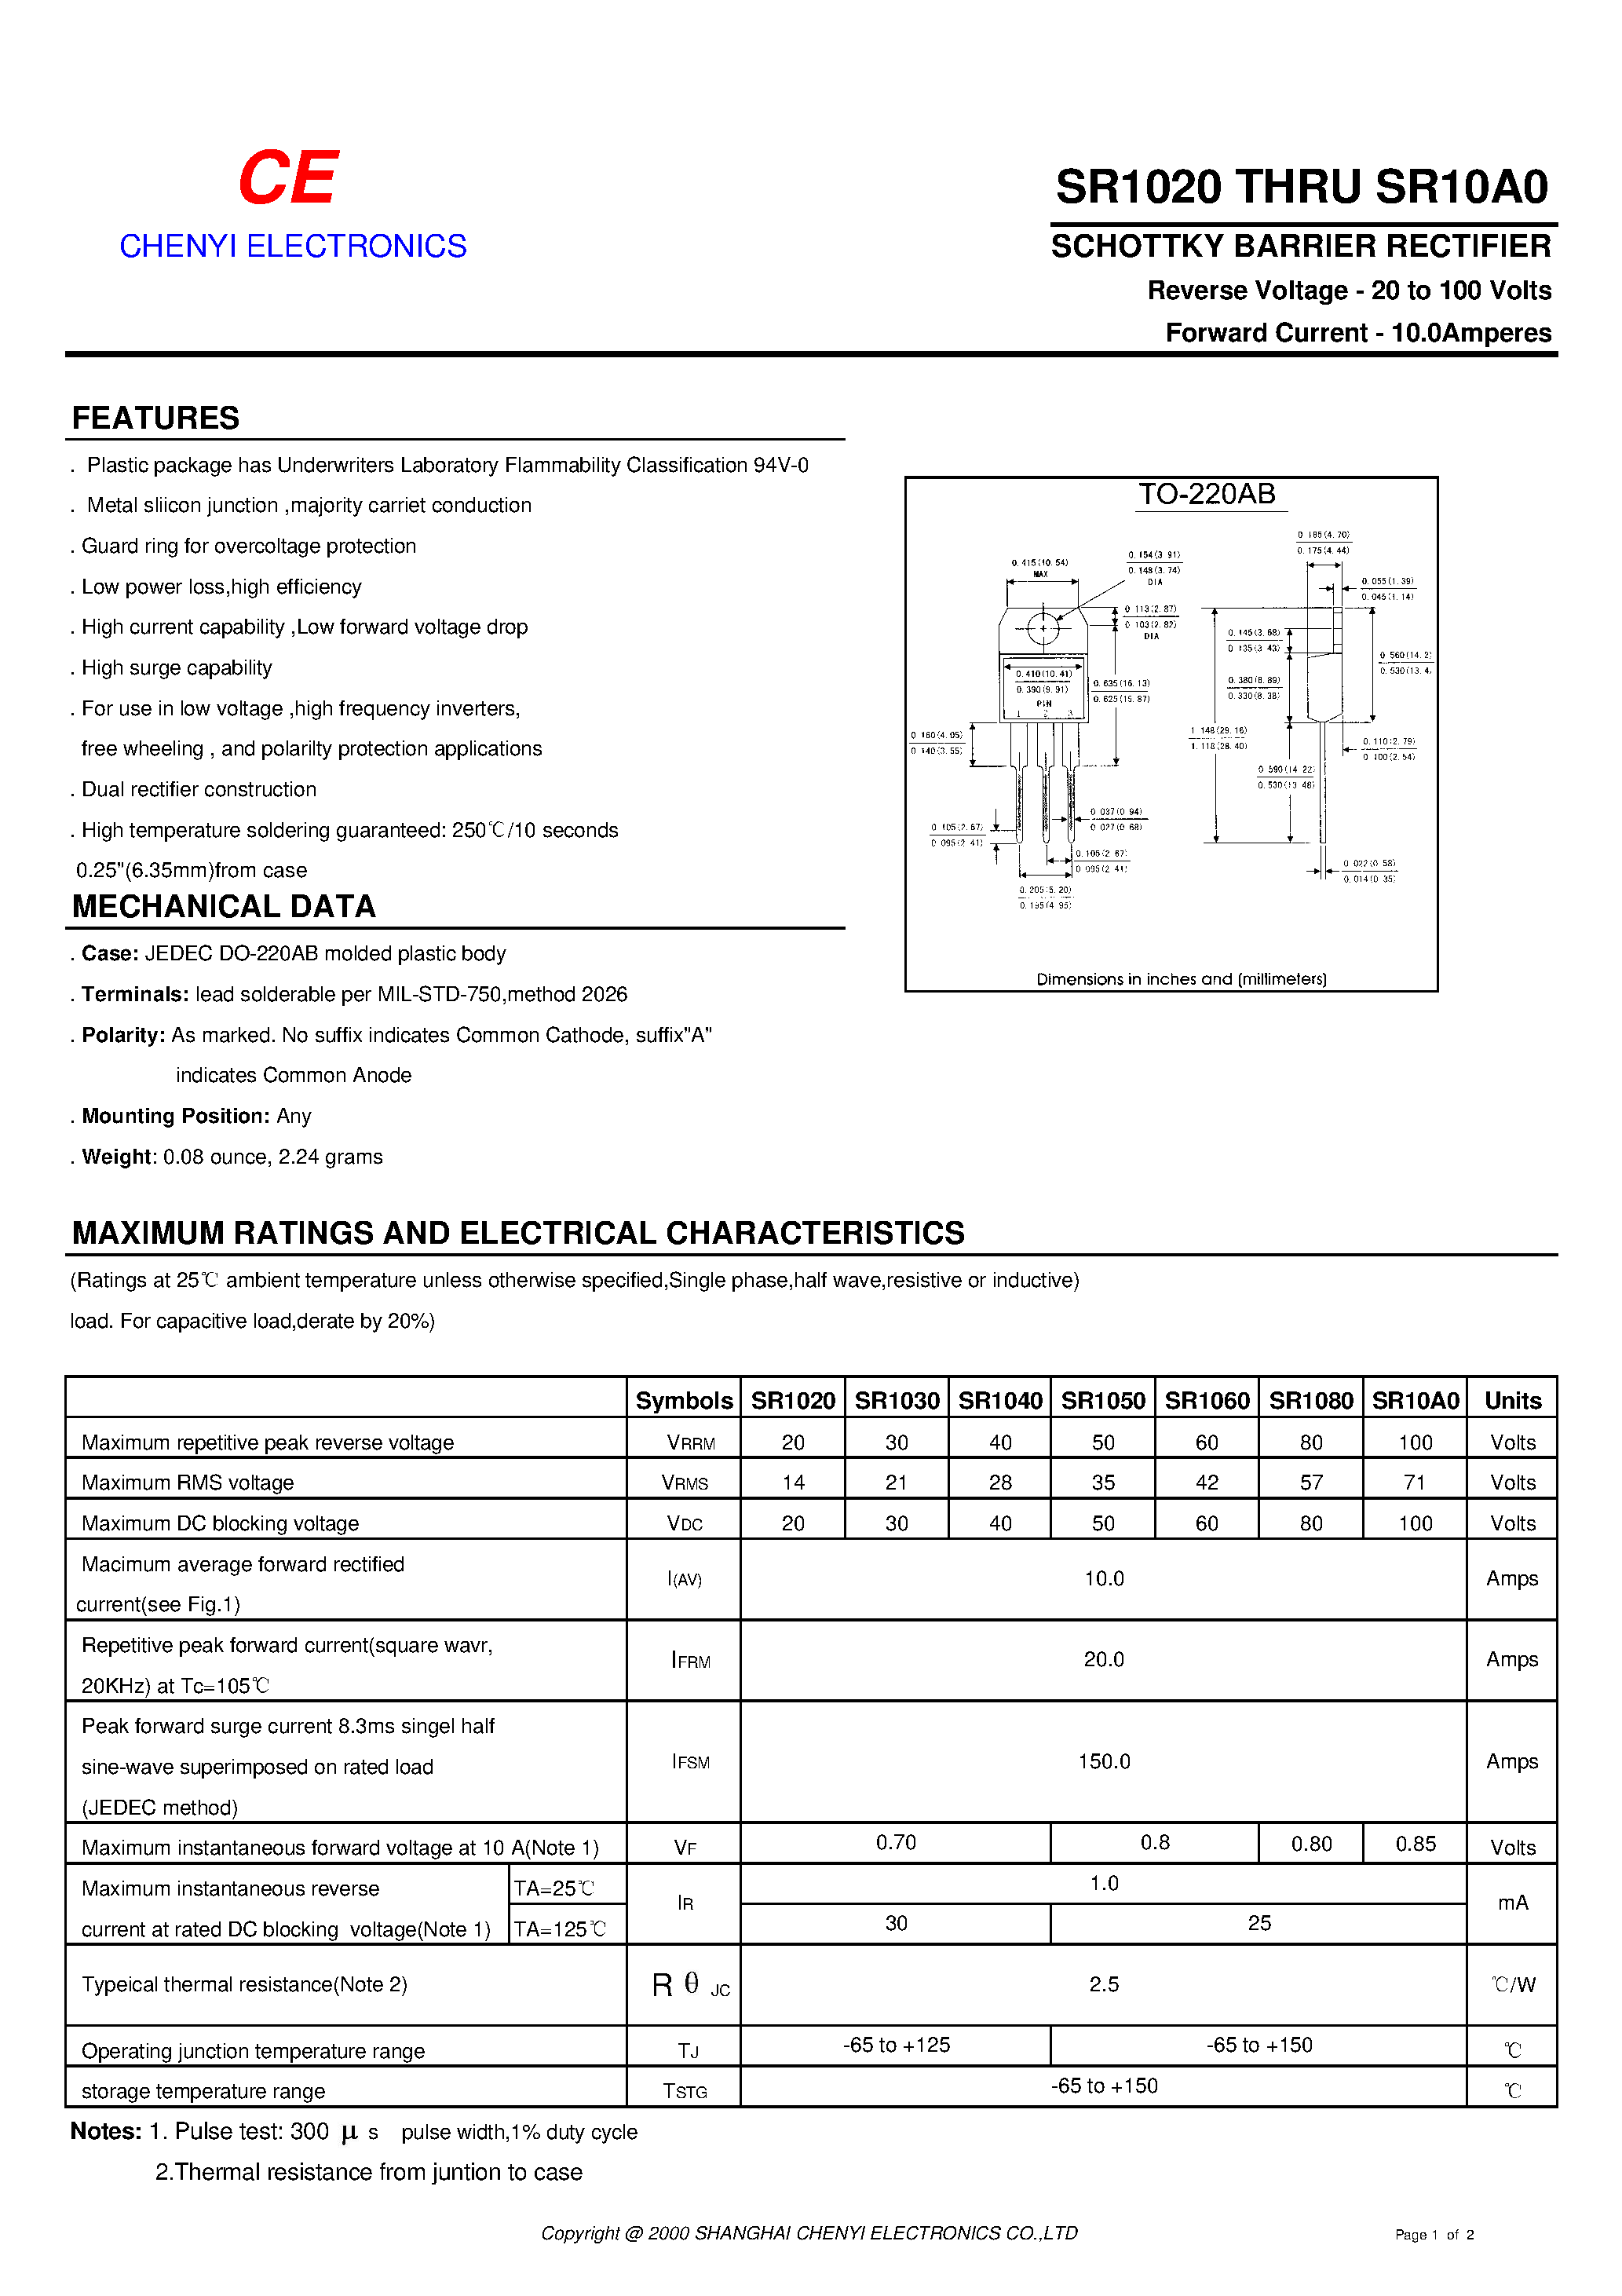 Datasheet SR1060 - SCHOTTKY BARRIER RECTIFIER page 1